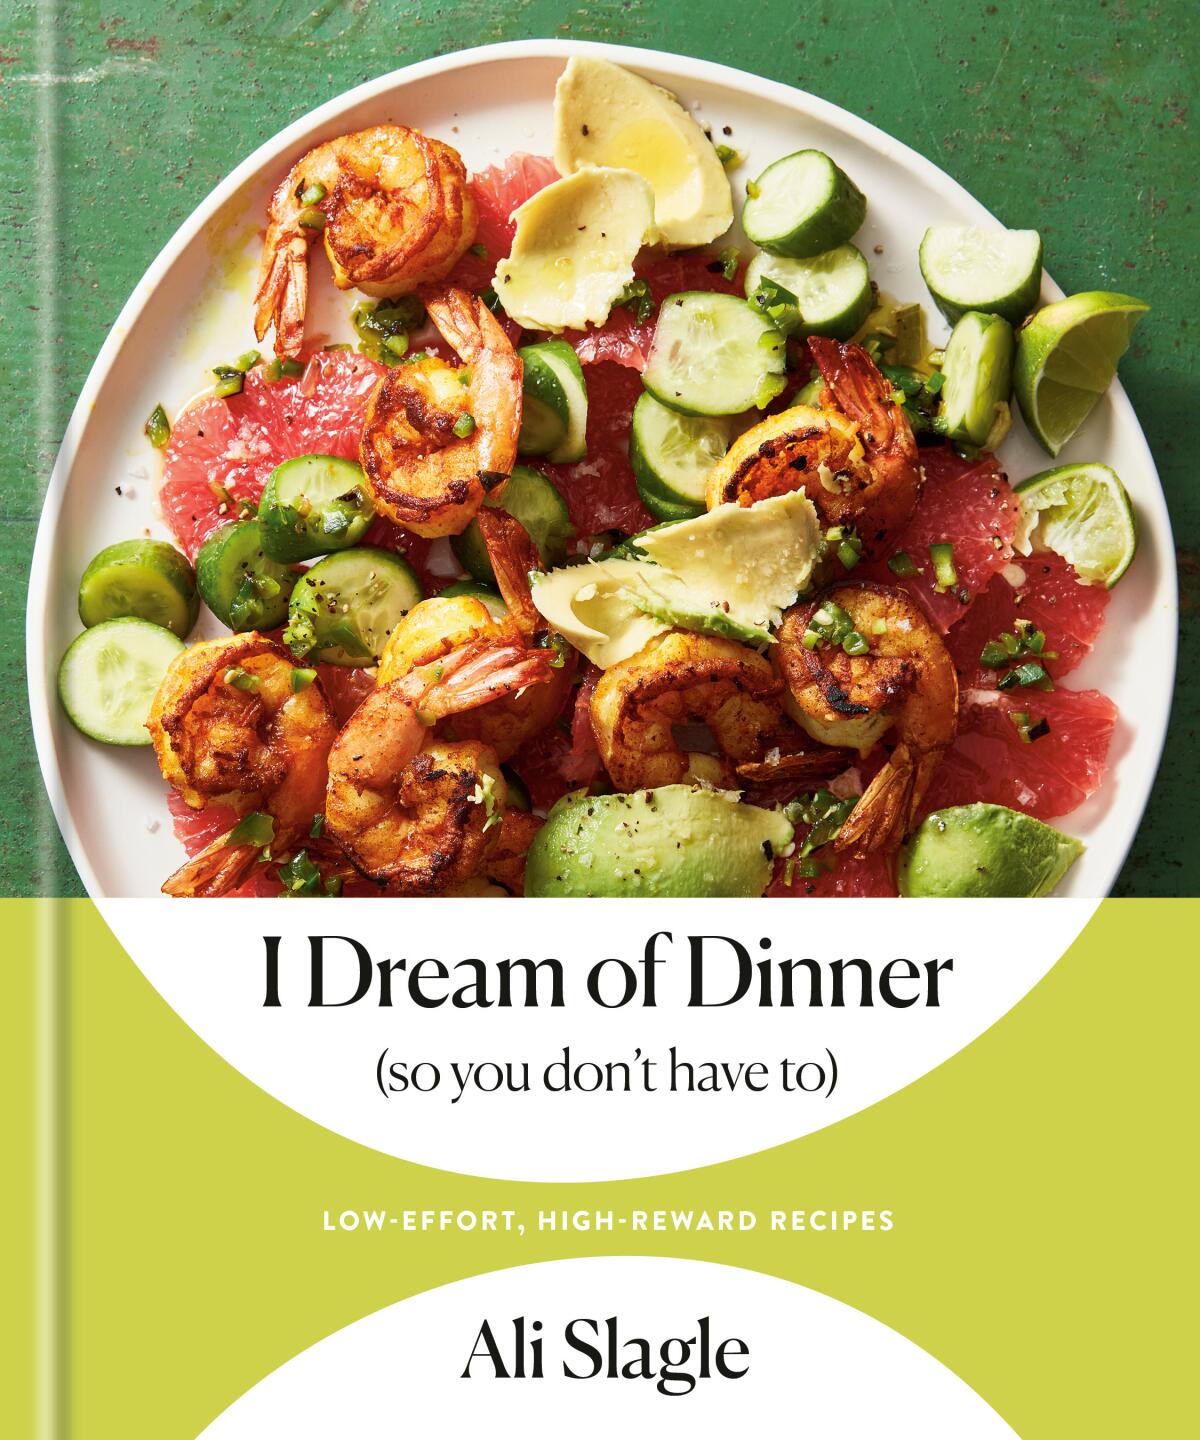 Book jacket for the cookbook "I Dream of Dinner," by Ali Slagle.